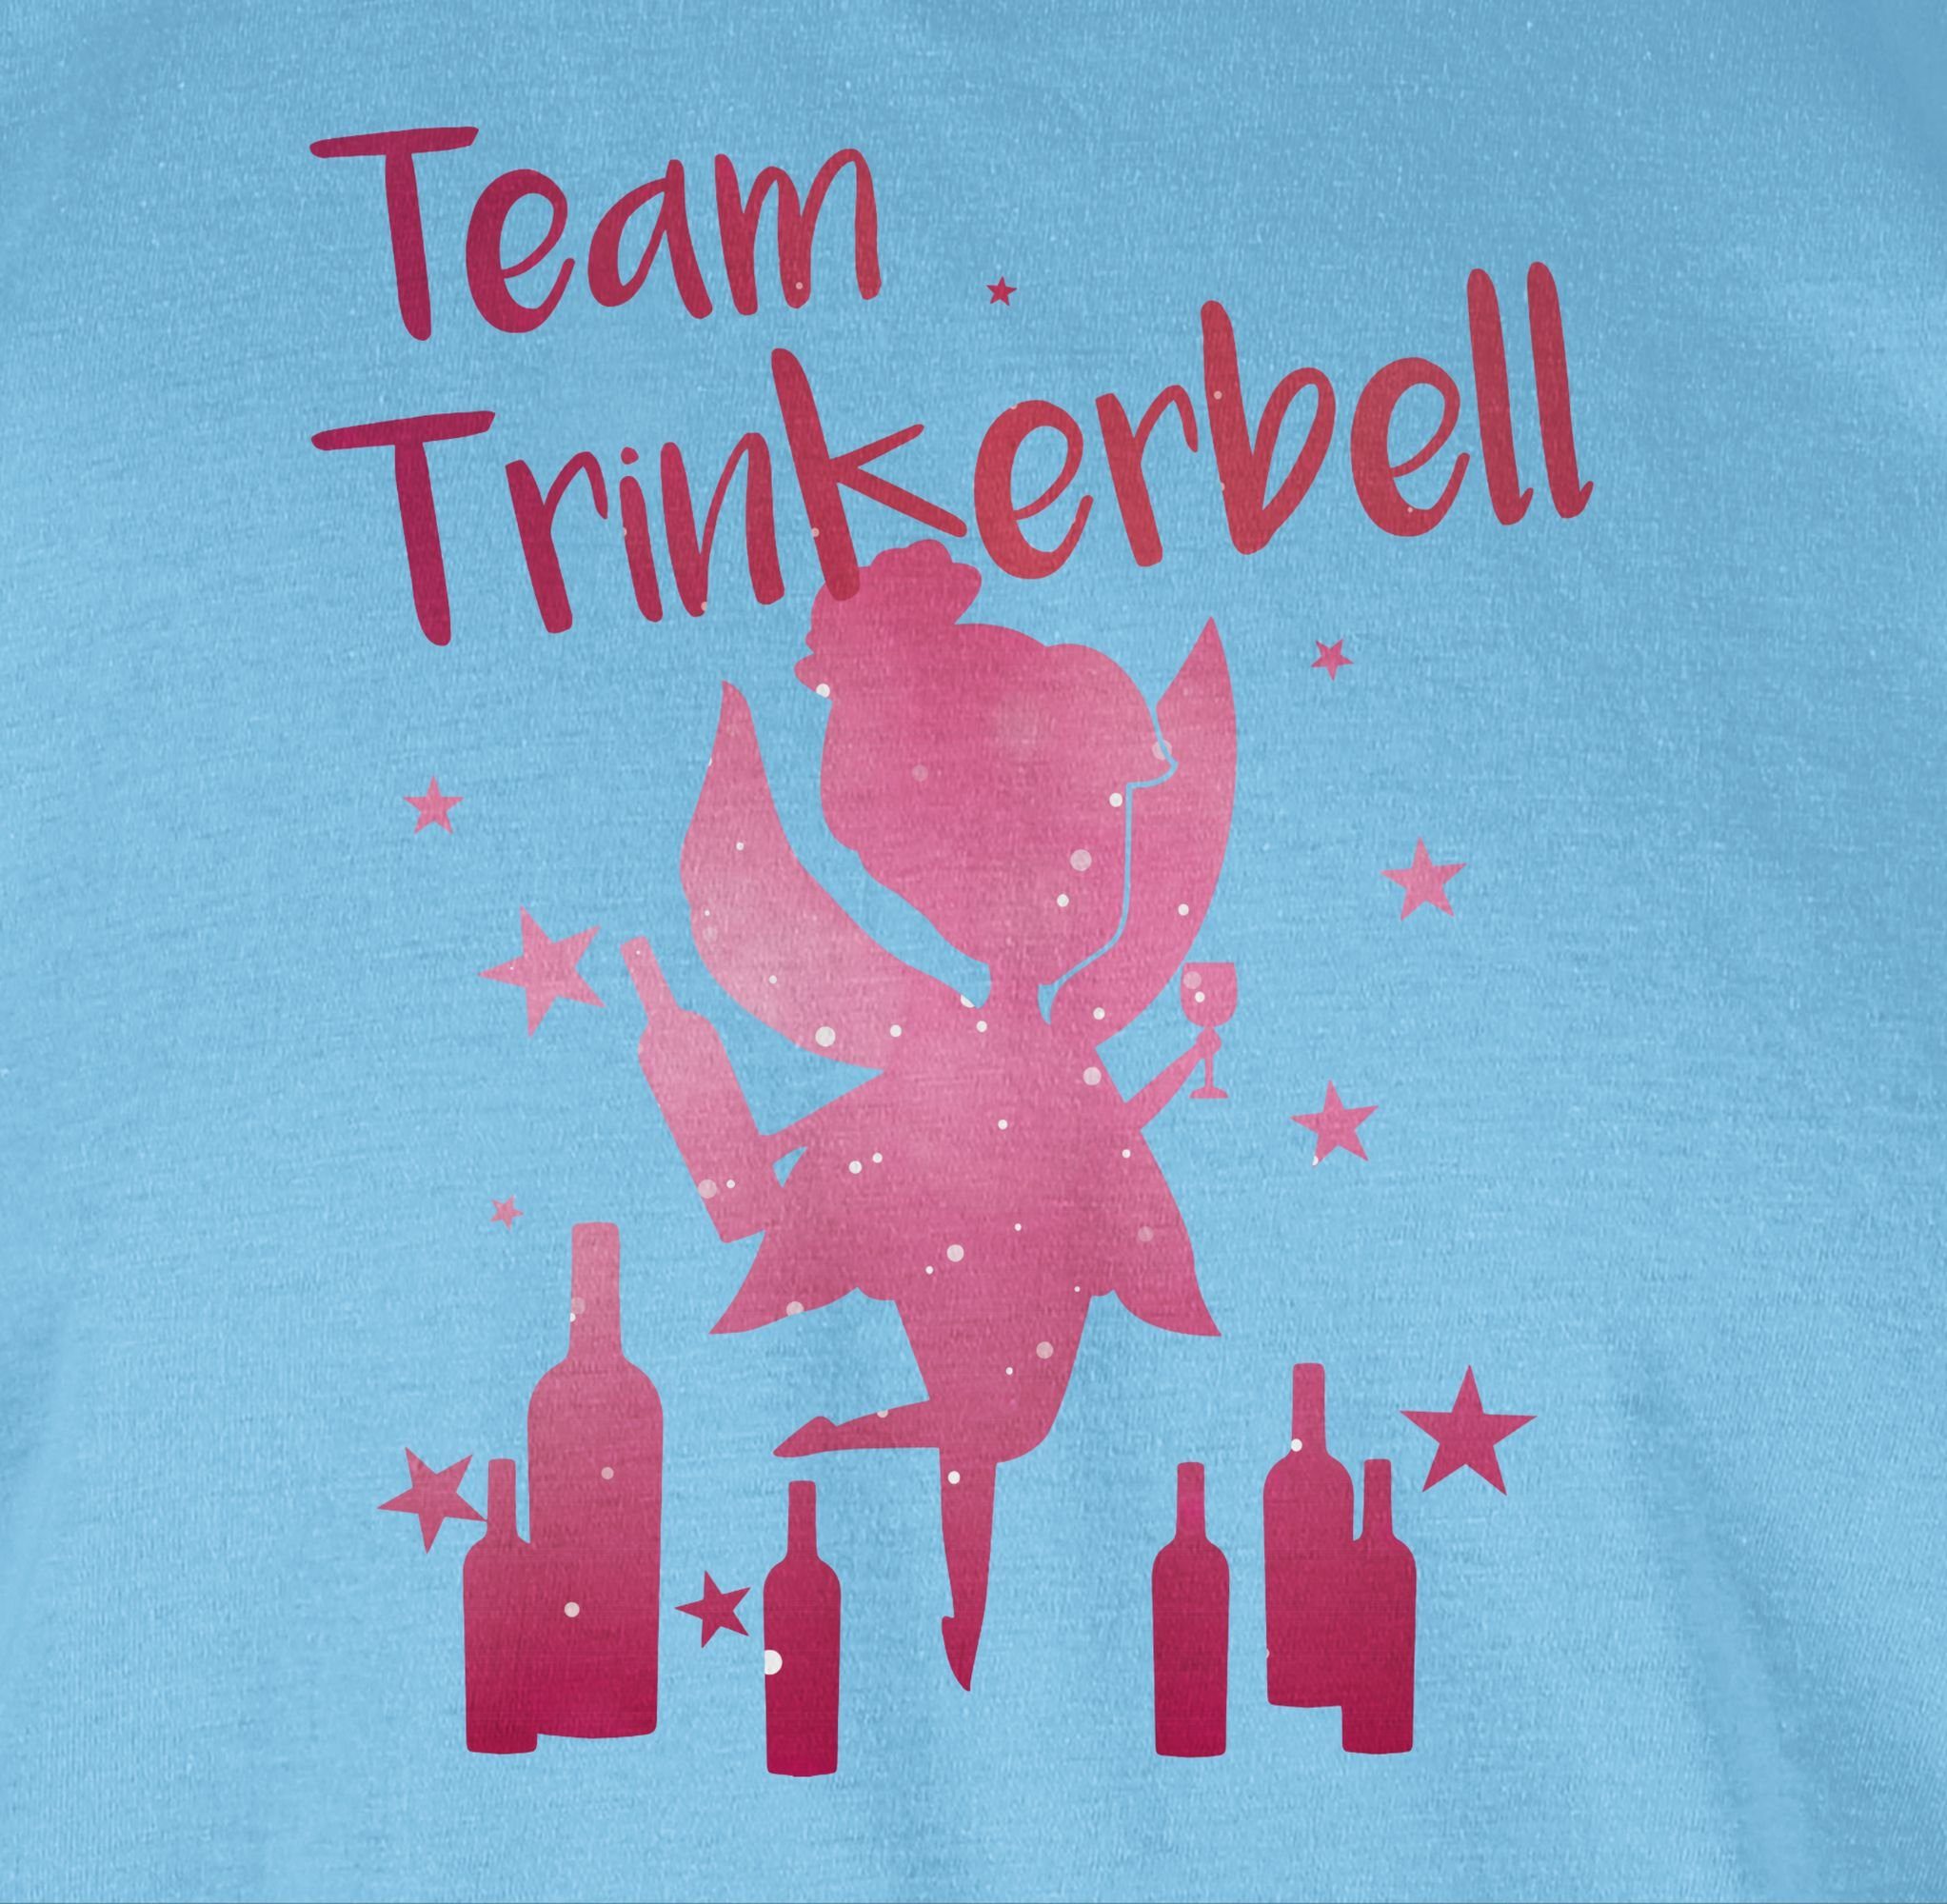 Shirtracer T-Shirt Karneval Outfit 03 Hellblau Trinkerbell Team